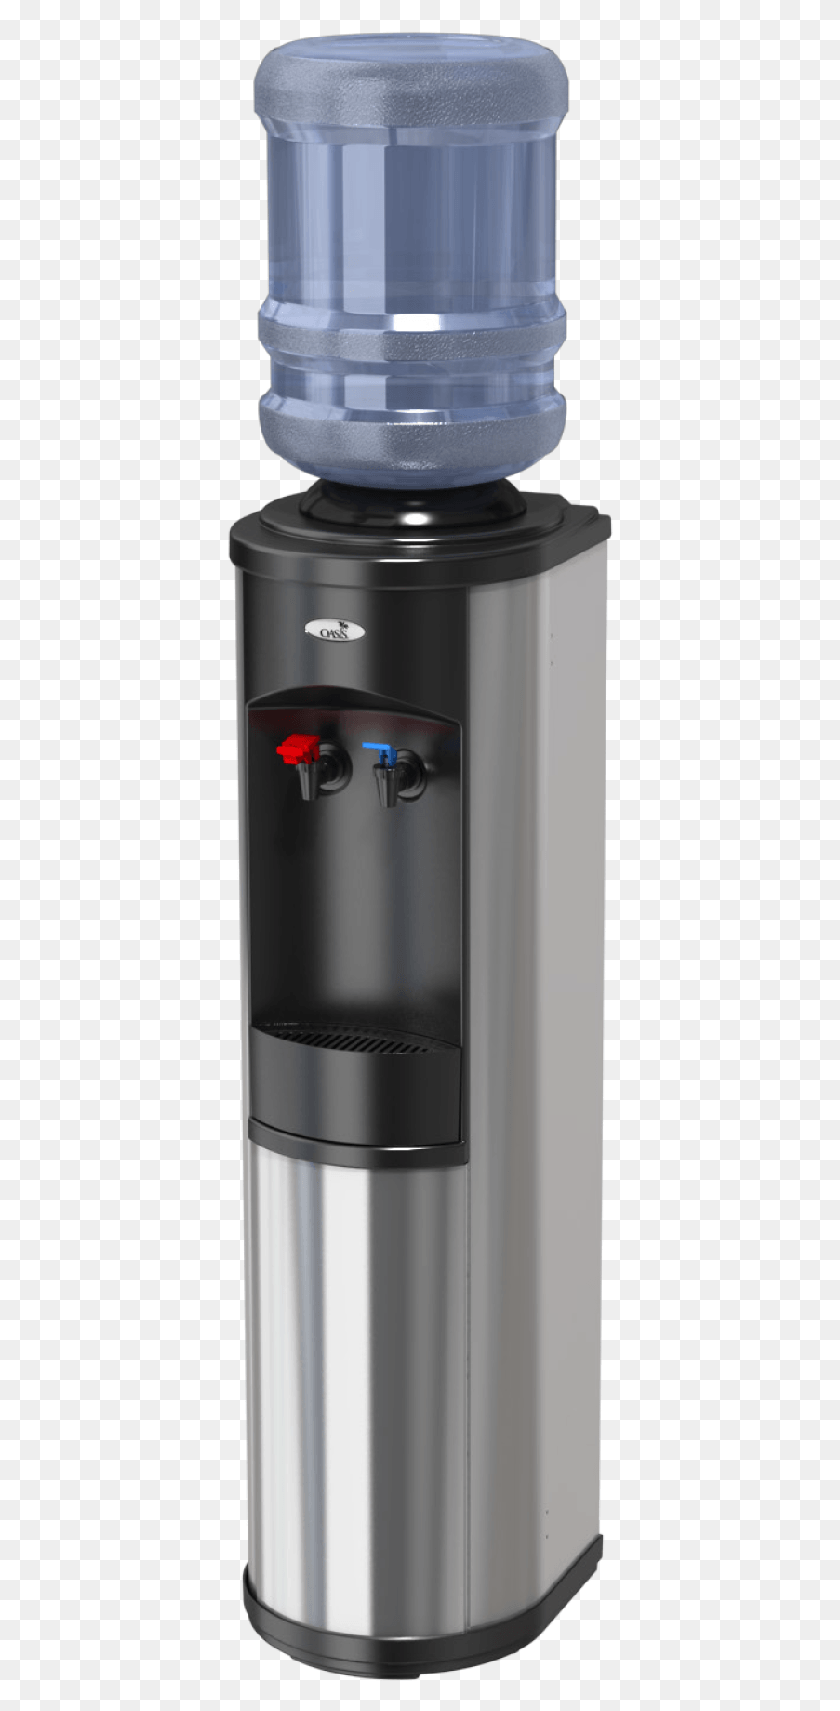 386x1651 Dispensador De Agua Oasis Coolers Pswsa1Shs Mexico, Appliance, Cooler, Shaker Hd Png